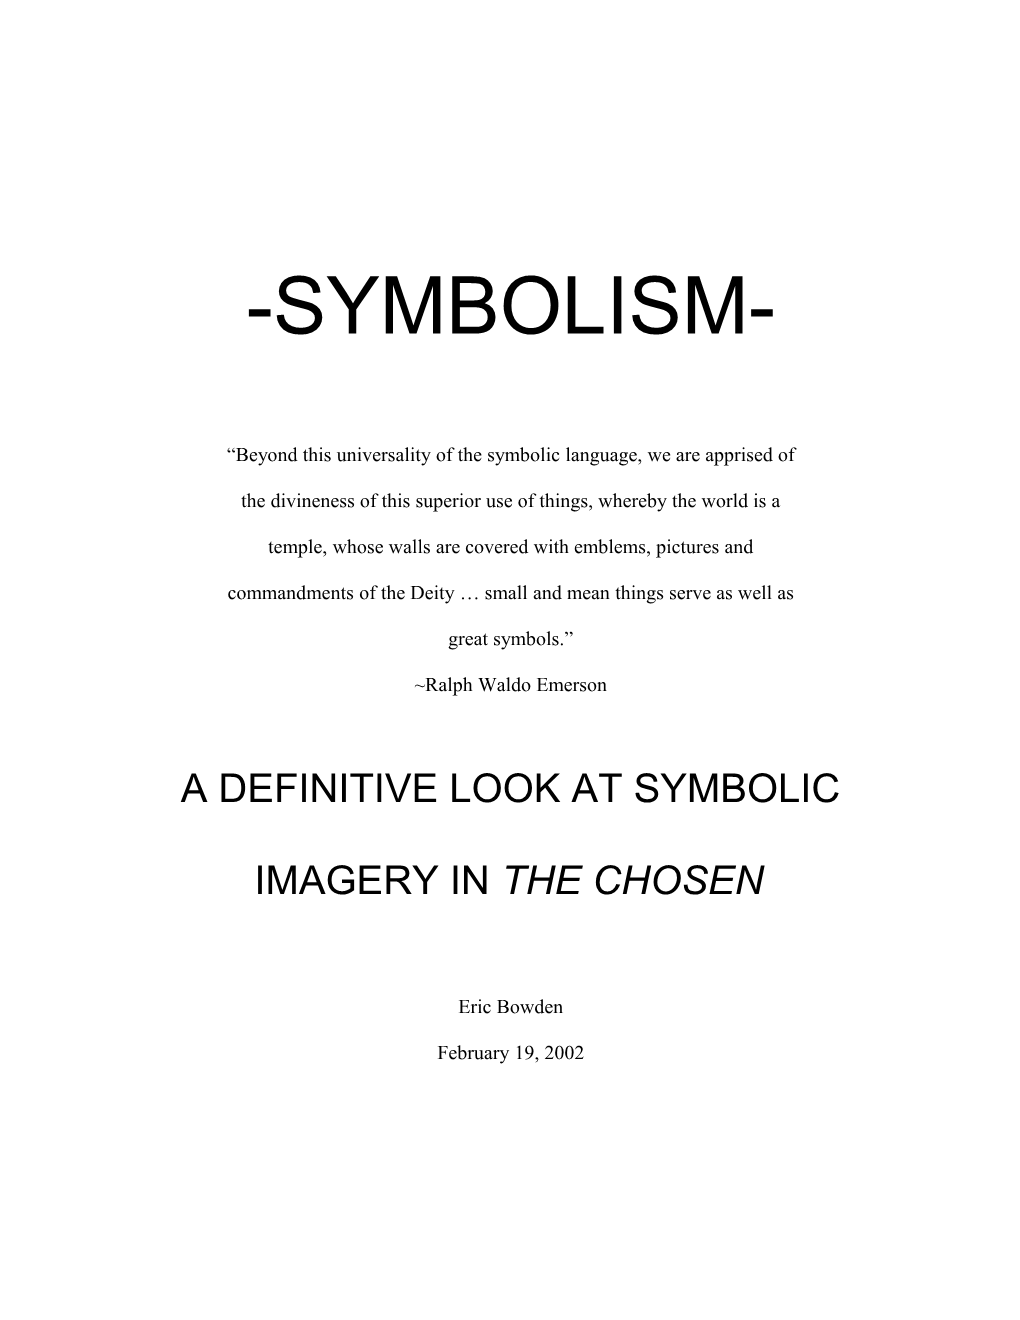 Symbolism - the Chosen